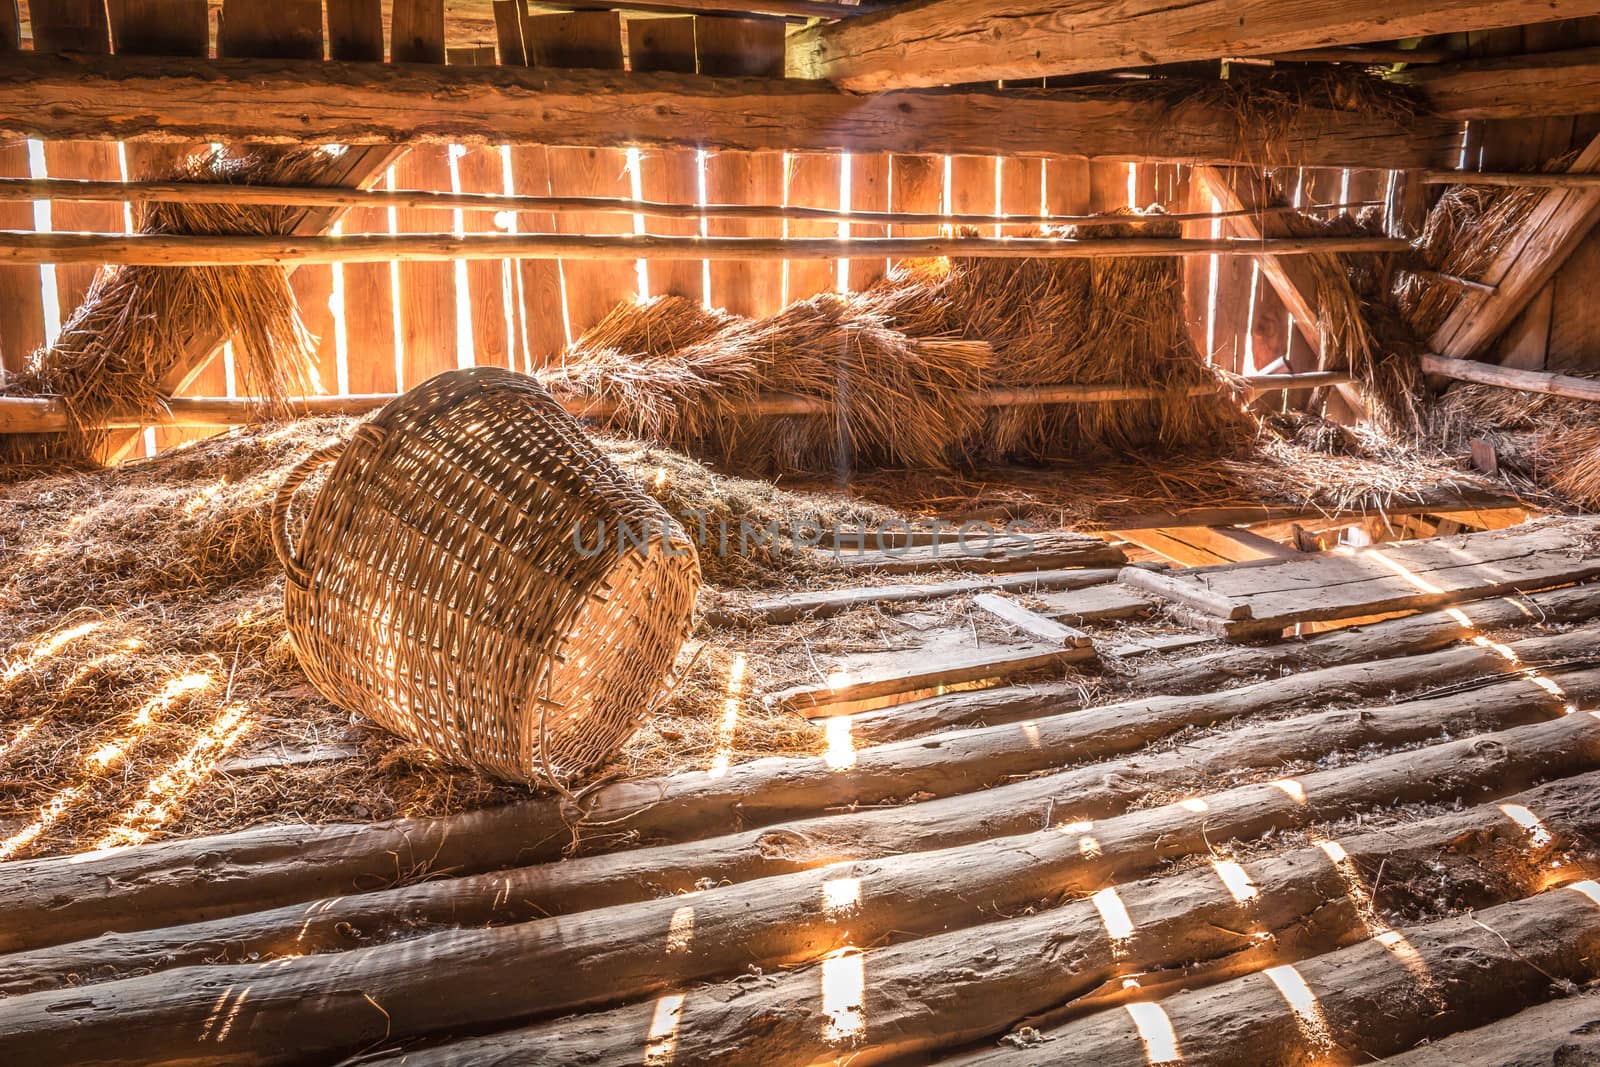 Early morning sunlight streams into a rustic barn on broken basket nex to pile of hay. Nice rustic vintage concept. by petrsvoboda91